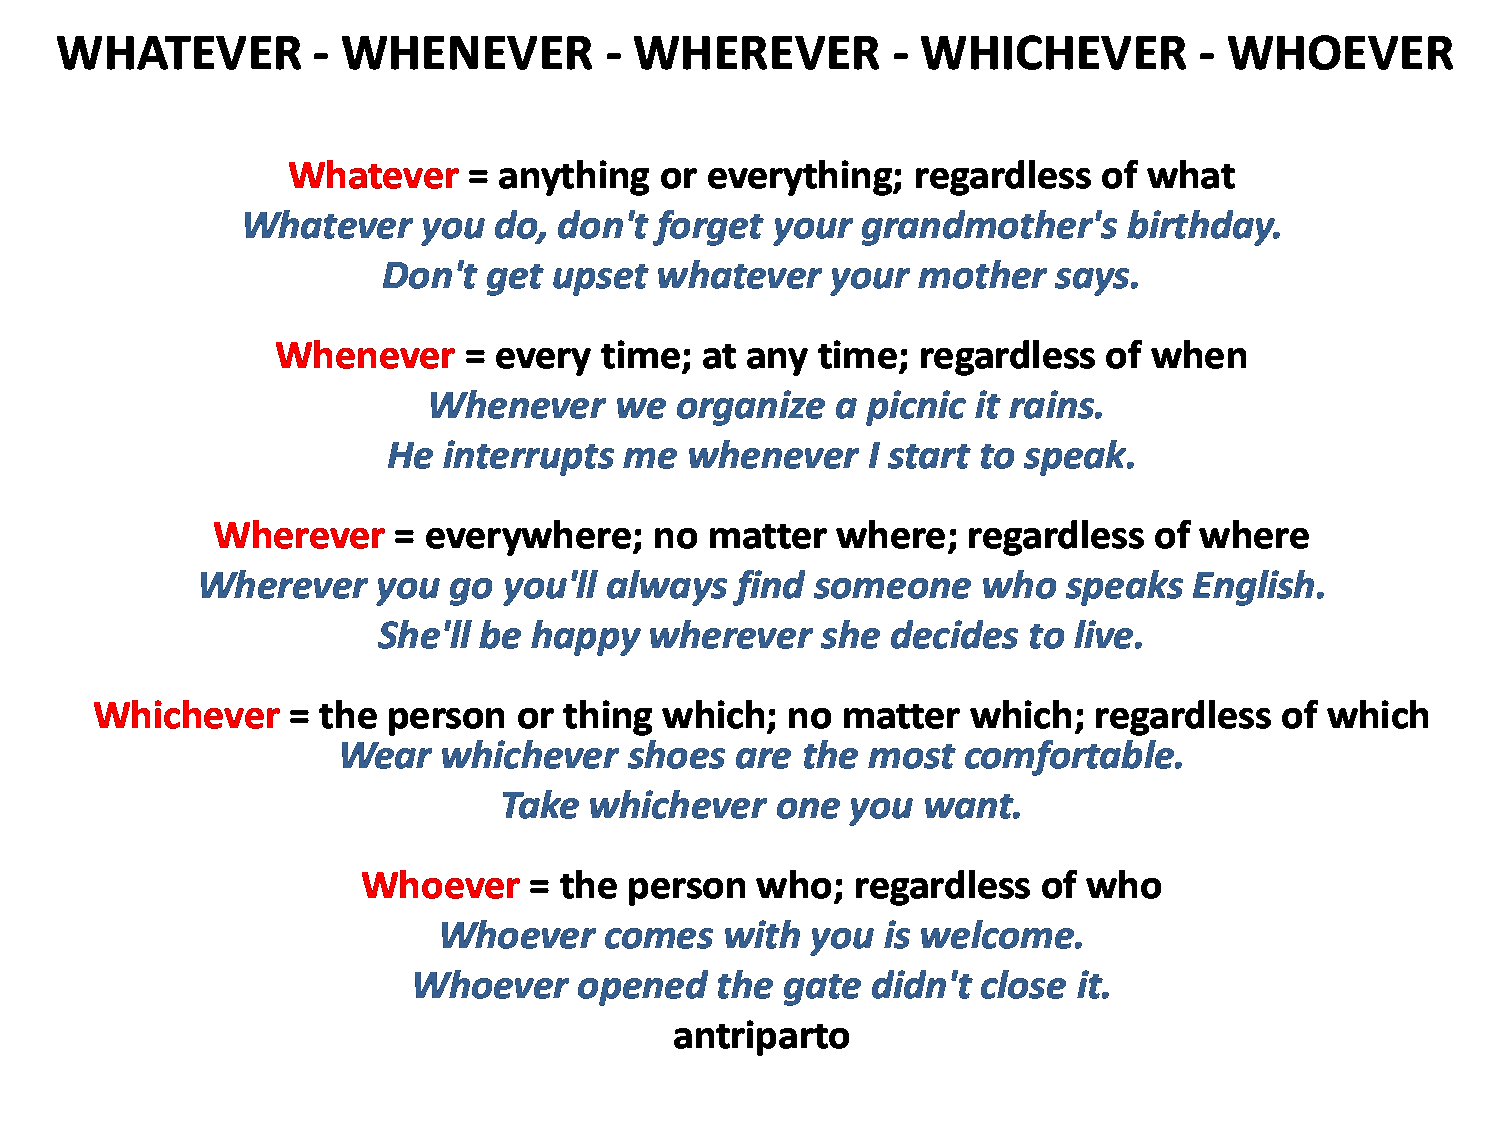 Como usar Whatever, Wherever, Whenever, However e Whichever?